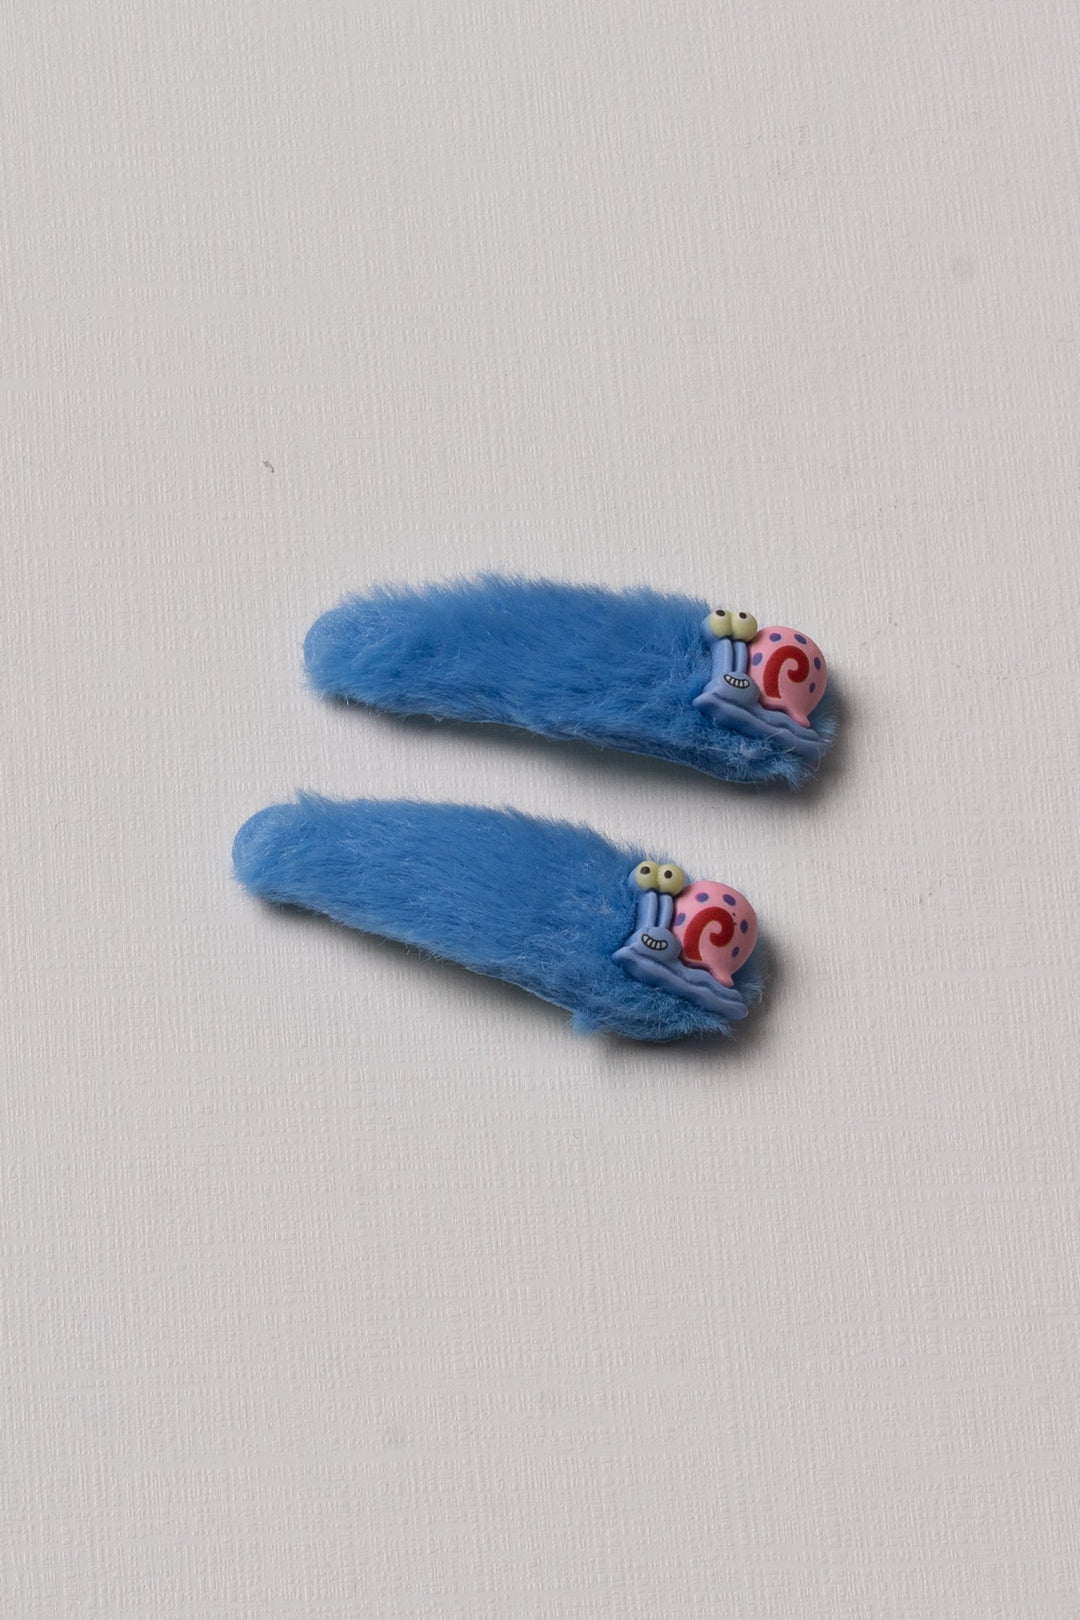 The Nesavu Tick Tac Clip Whimsical Blue Furry Character Hair Clip Nesavu Fun Blue Furry Character Hair Clip | Cute Stylish Accessory | The Nesavu